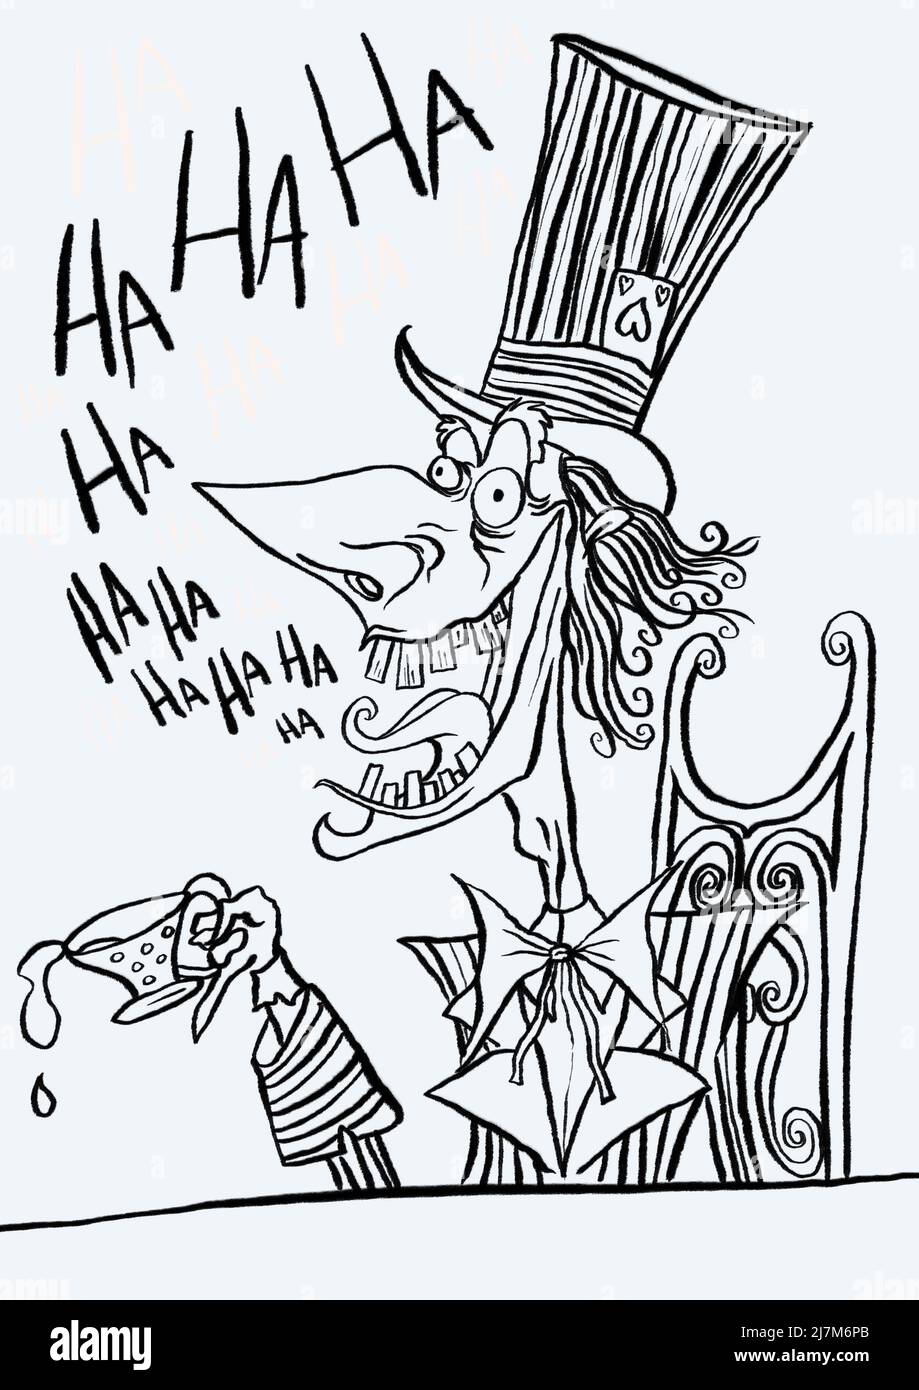 The Mad Hatter Alice in Wonderland illustration Stock Photo